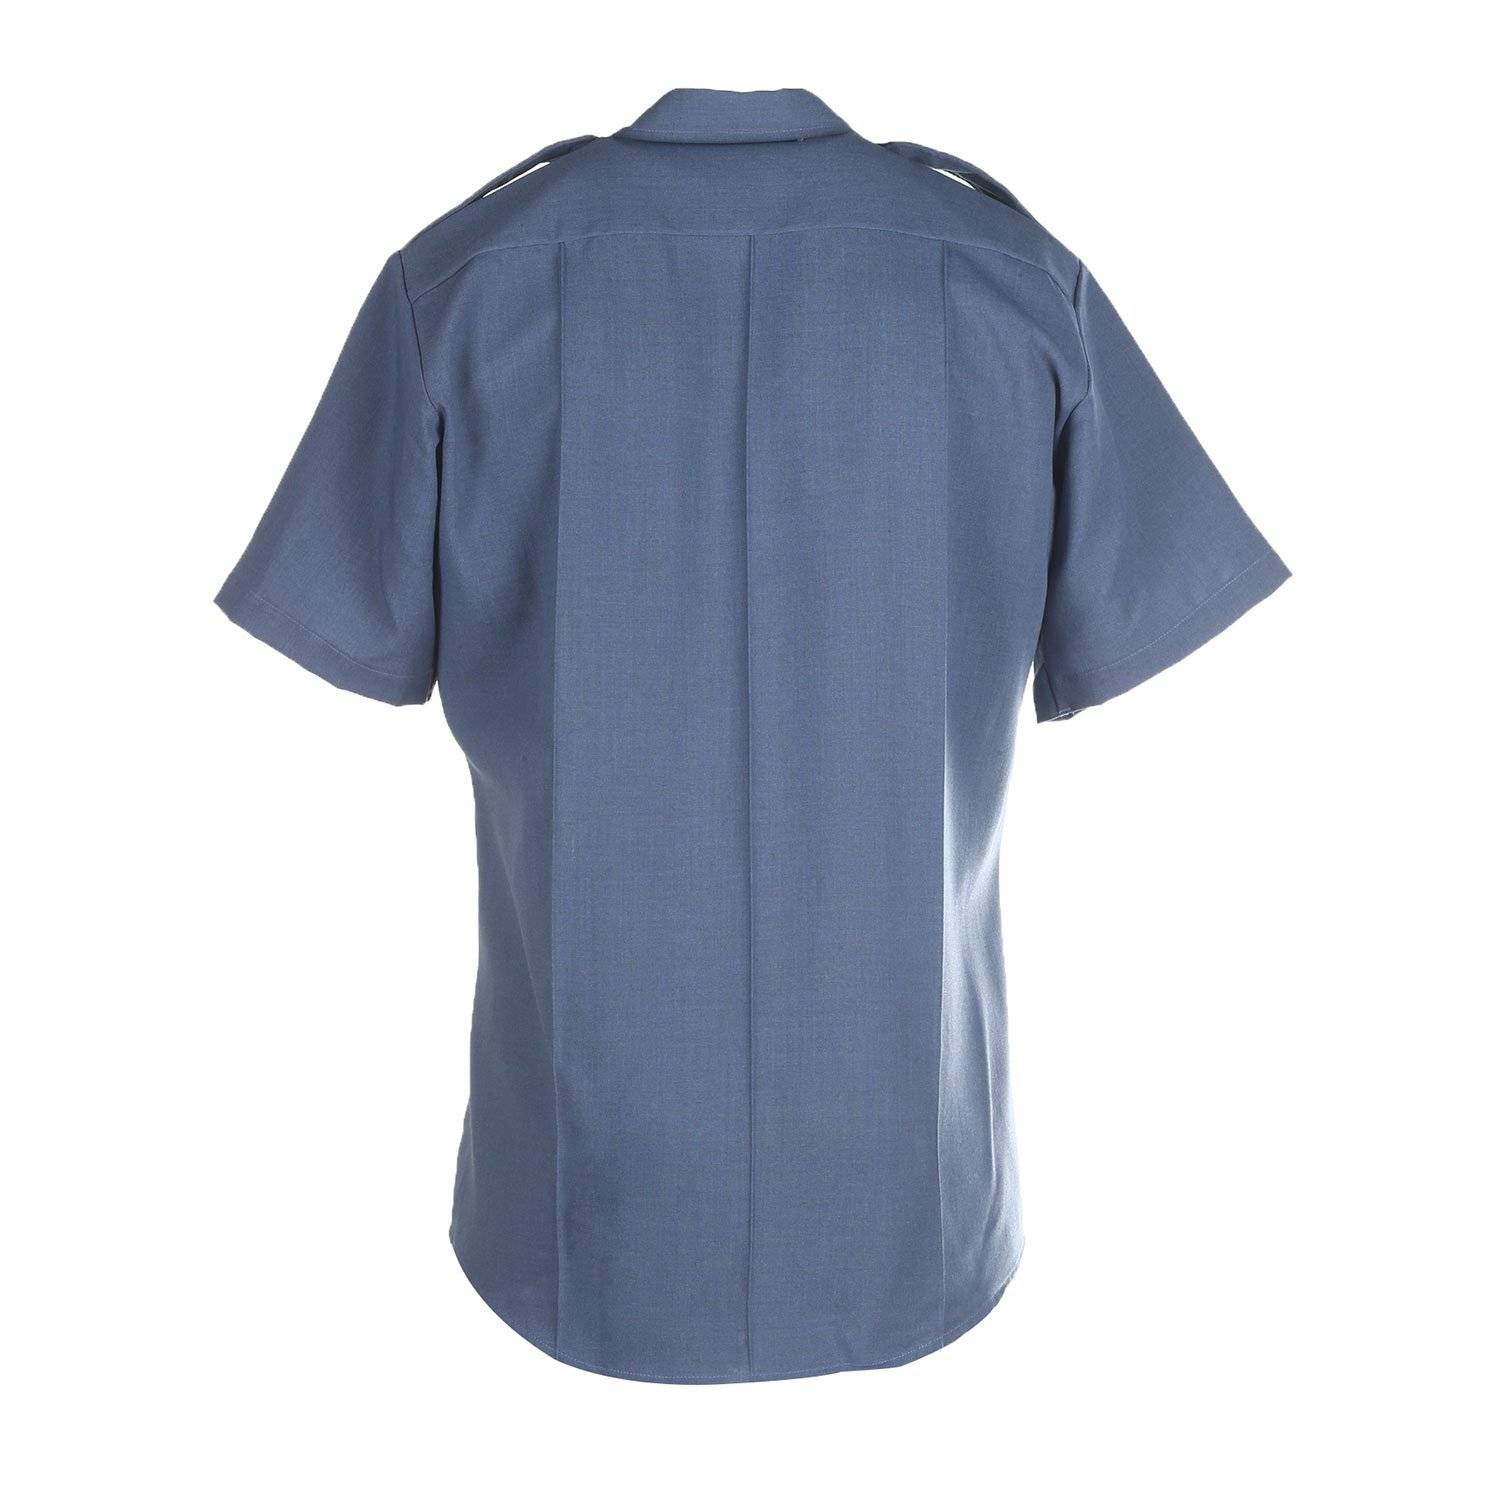 Flying Cross Men's Deluxe Tropical Weave Short Sleeve Shirt